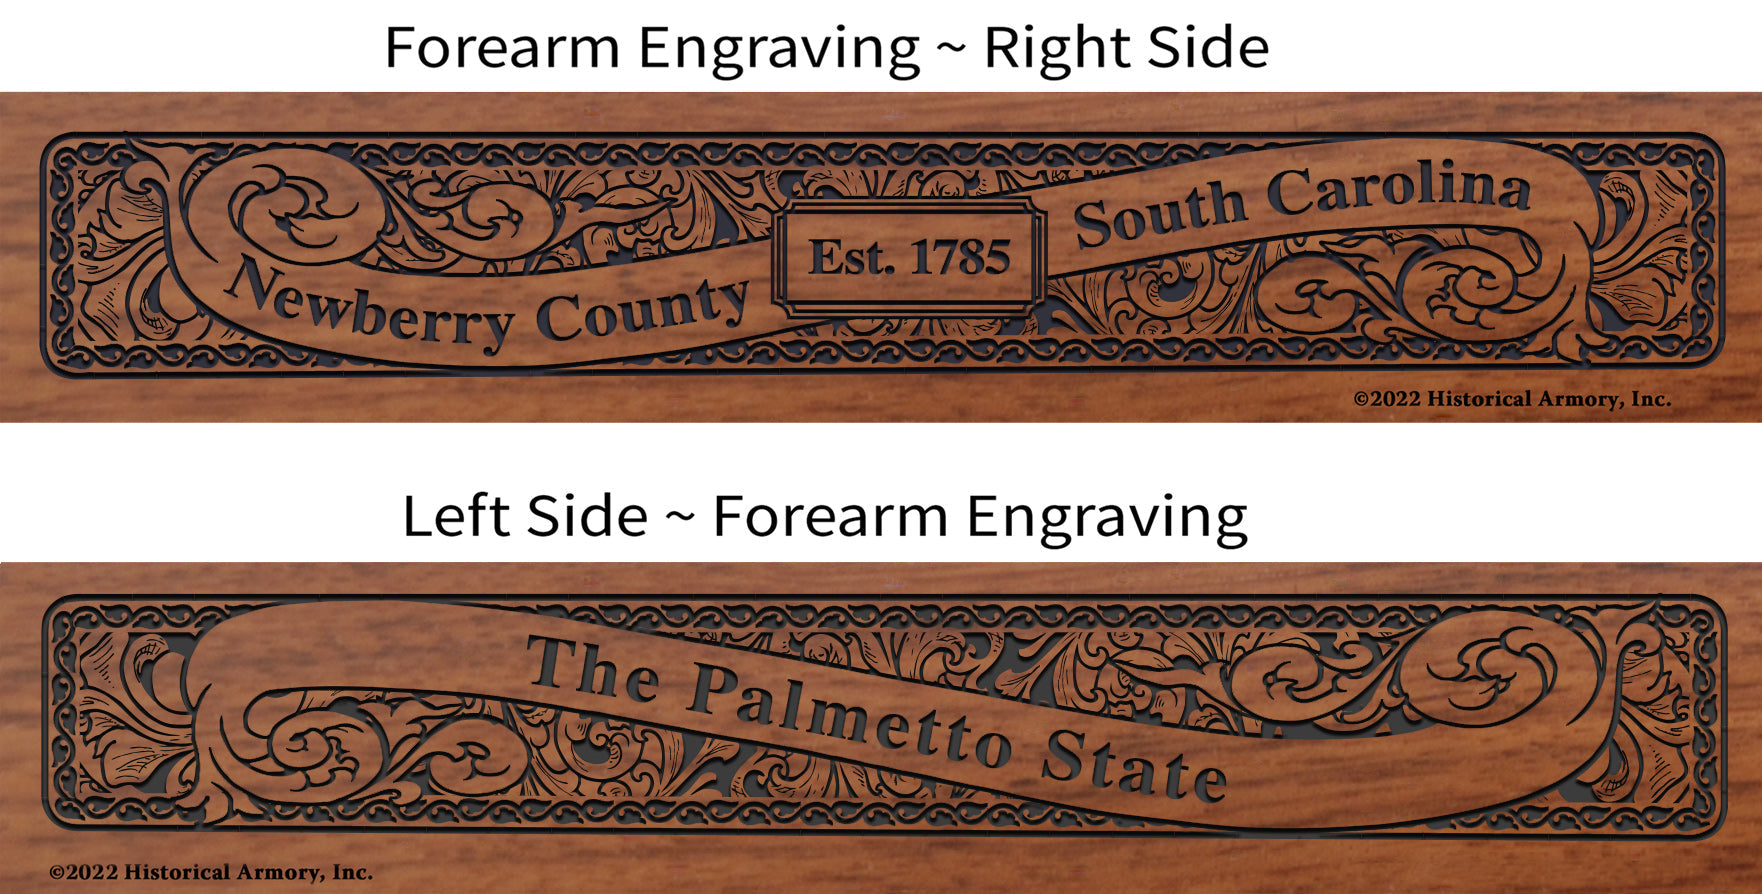 Newberry County South Carolina Engraved Rifle Forearm